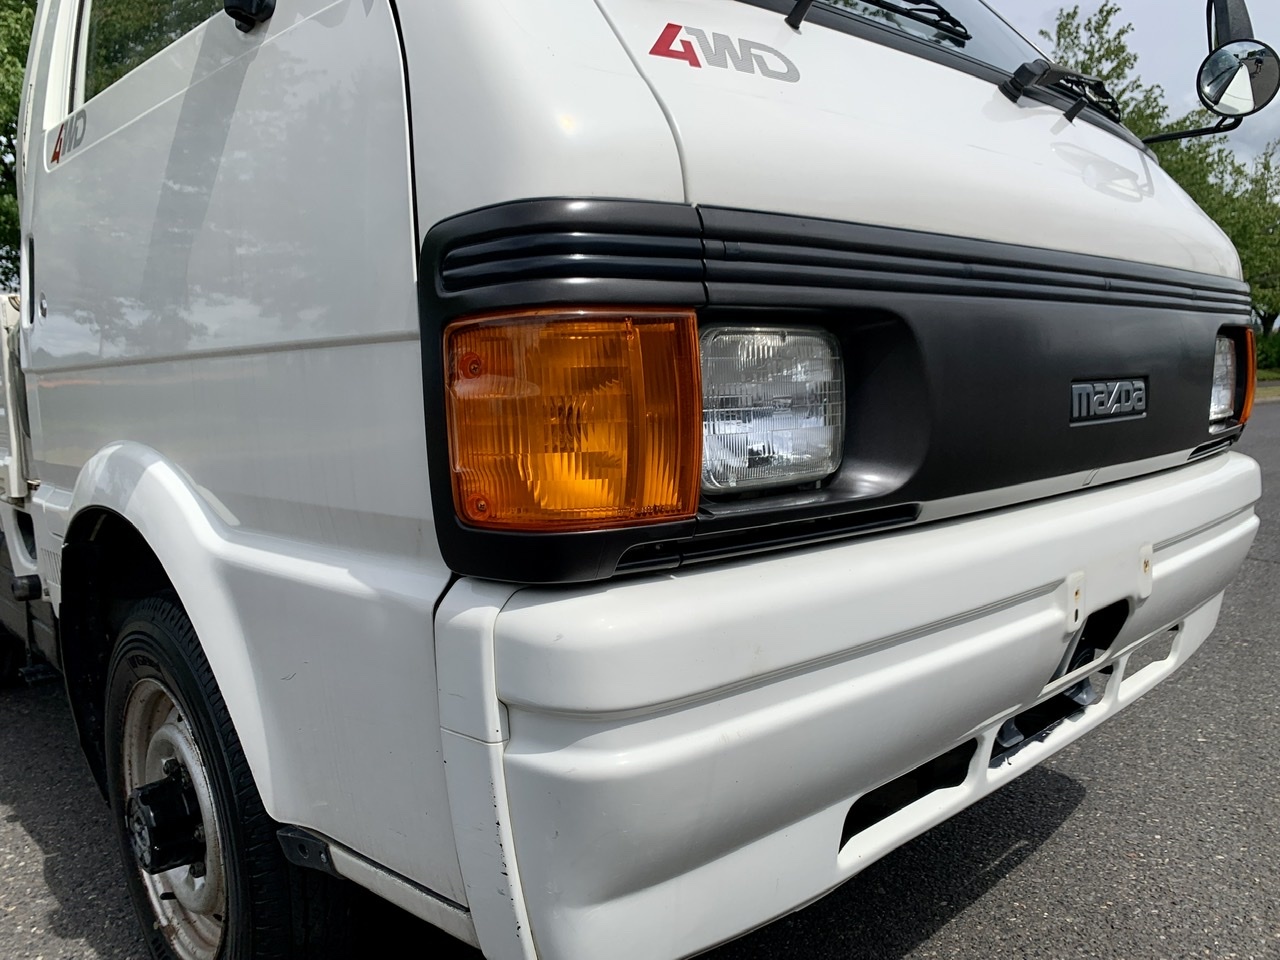 Boeki USA | Used 1993 White Mazda Bongo Dually 1.8L For ...